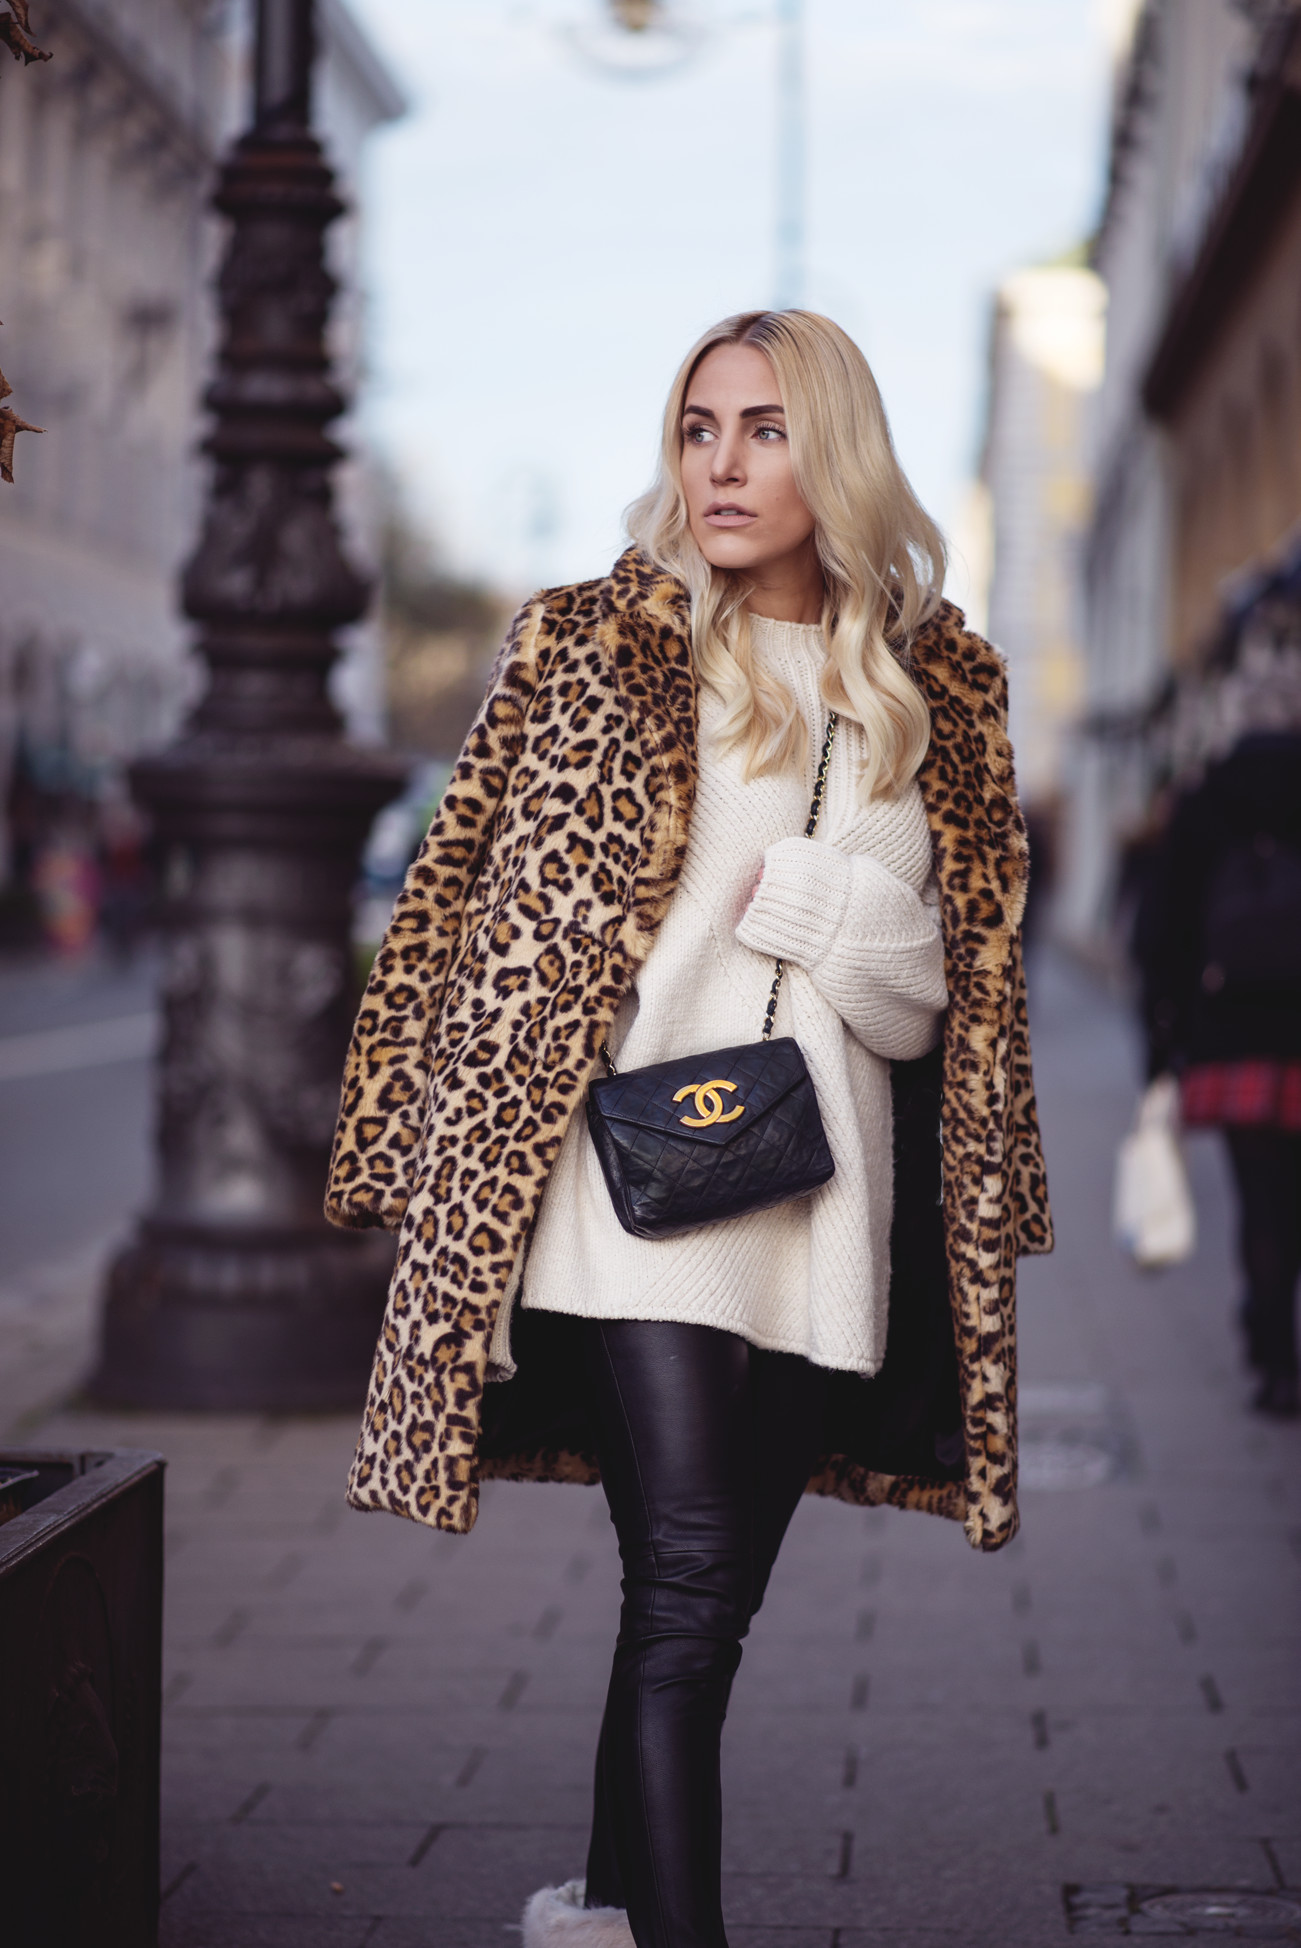 fashion-fashionblogger-blogger-chanel-winter-cozy-knitwear-leo-sequinsophia-2-dsc_6118